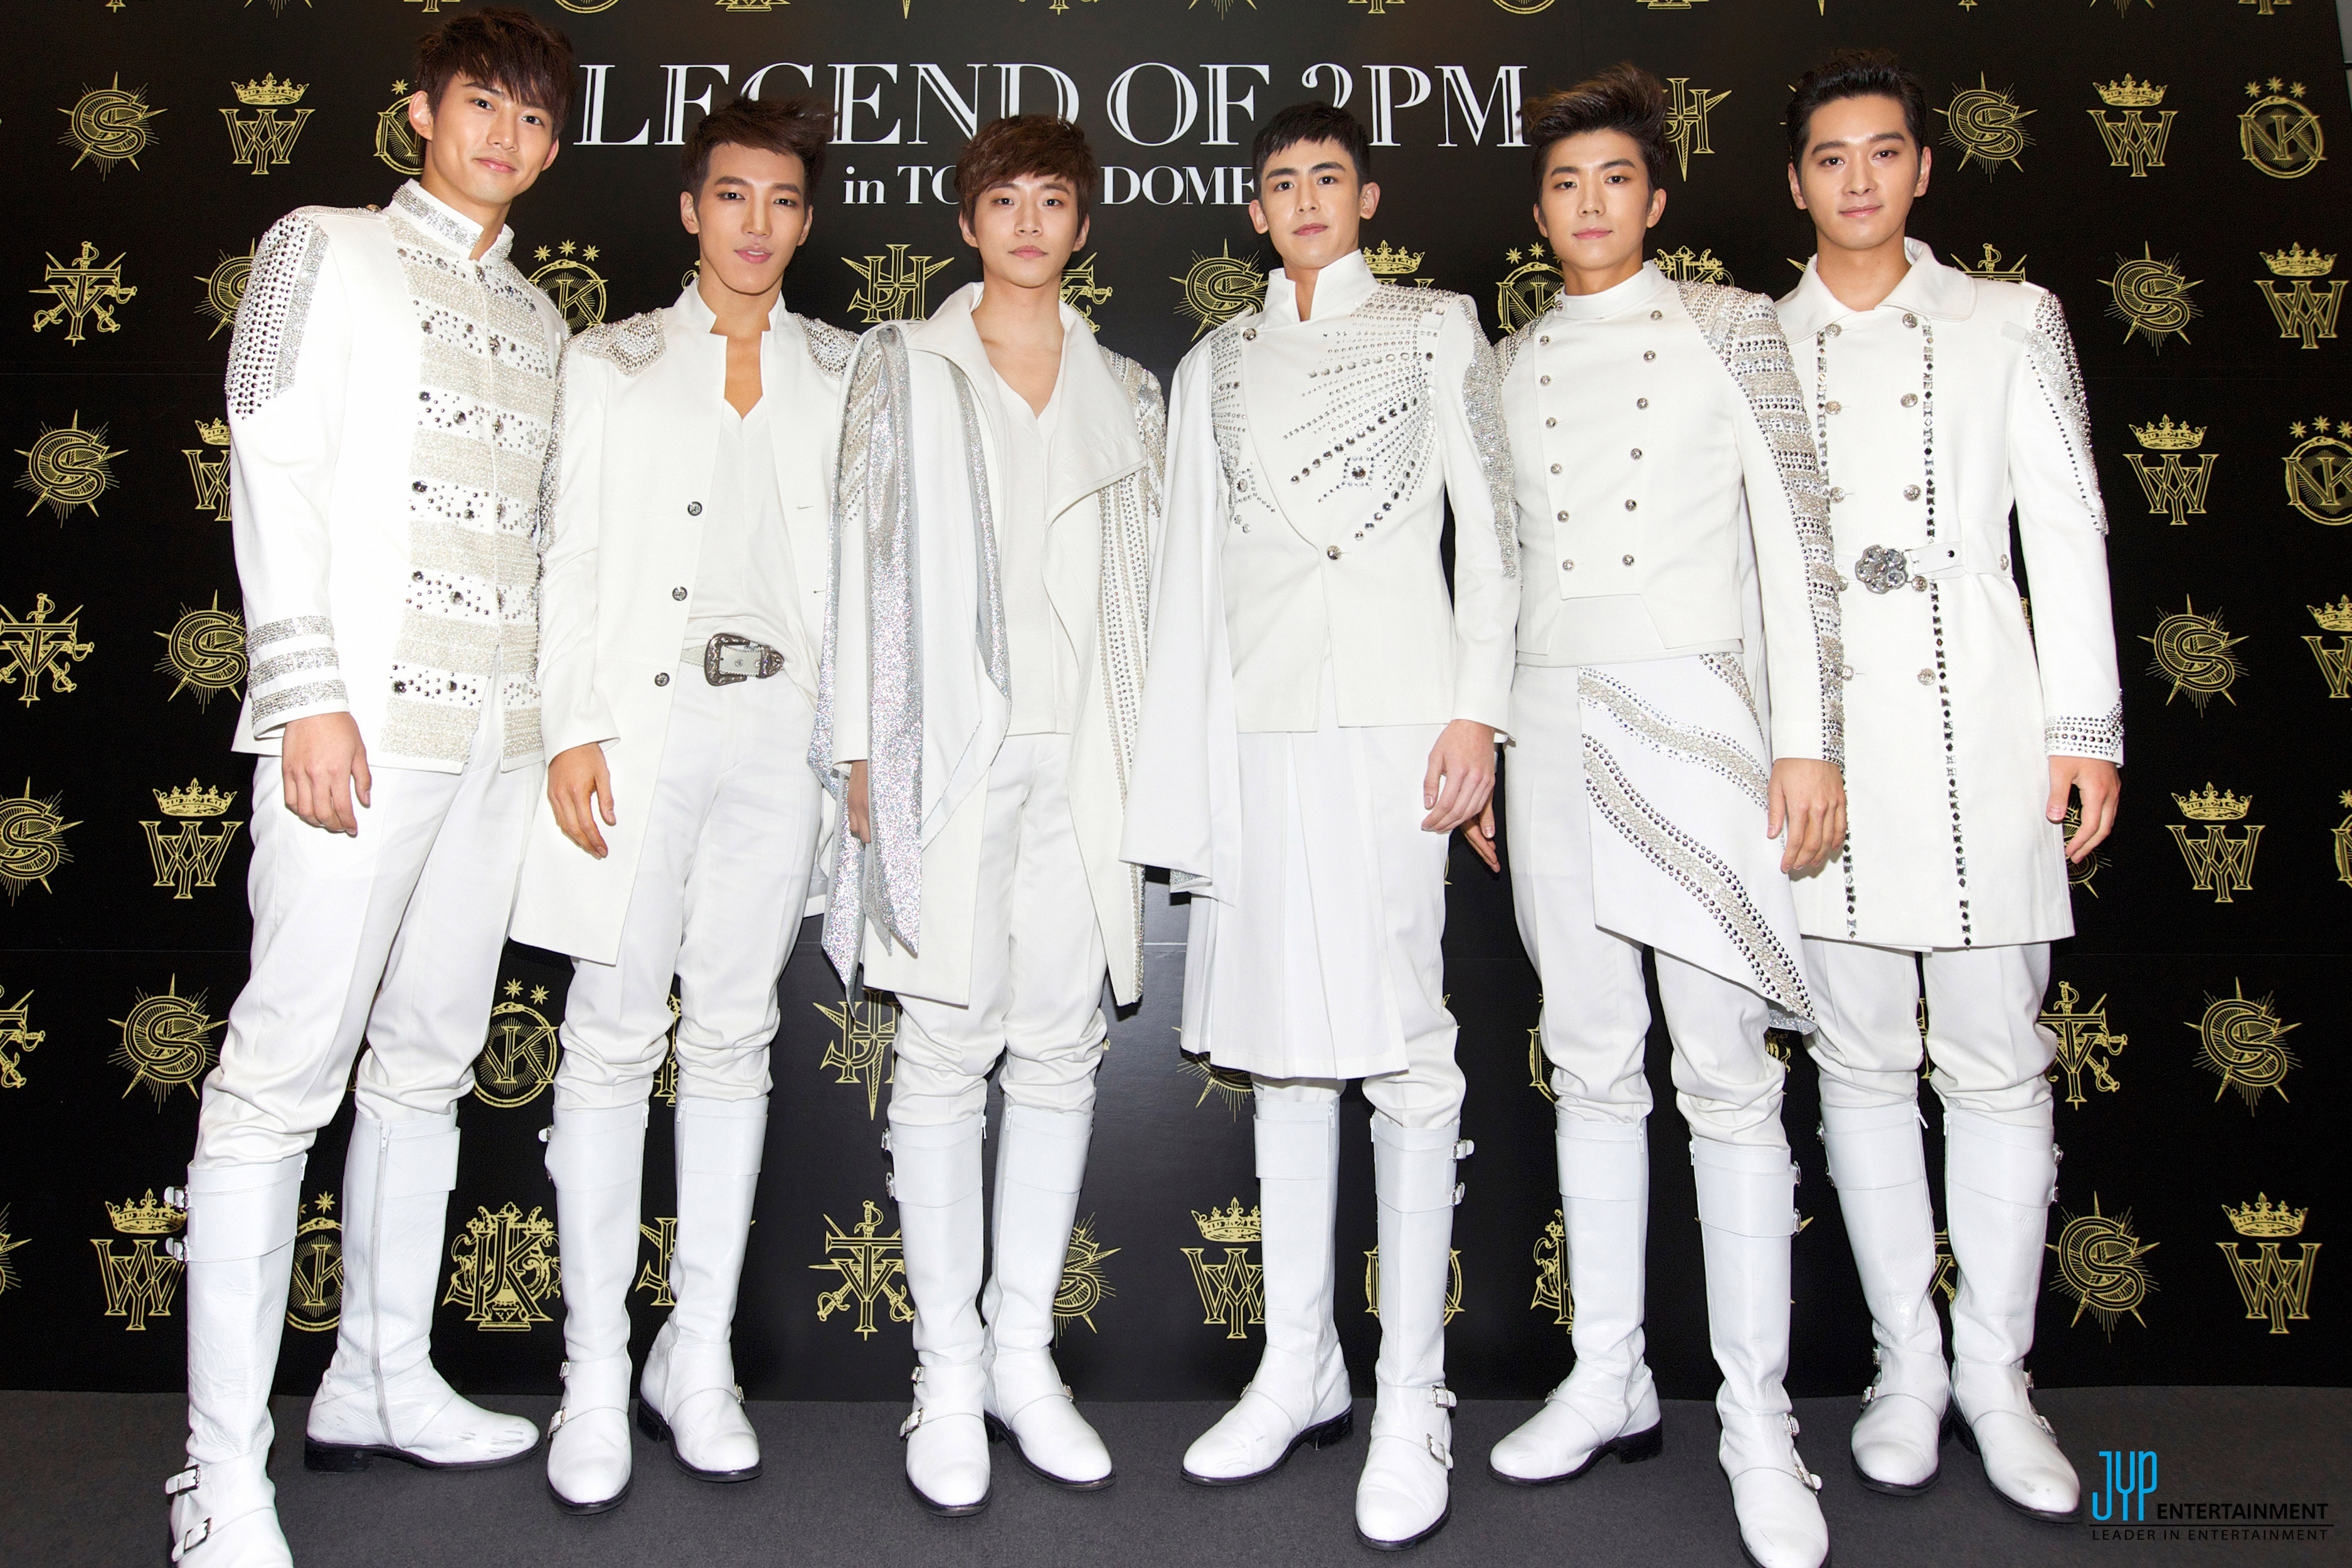 PHOTO】2PM、東京ドームを熱狂させた2日間“LEGEND OF 2PM” - Kstyle